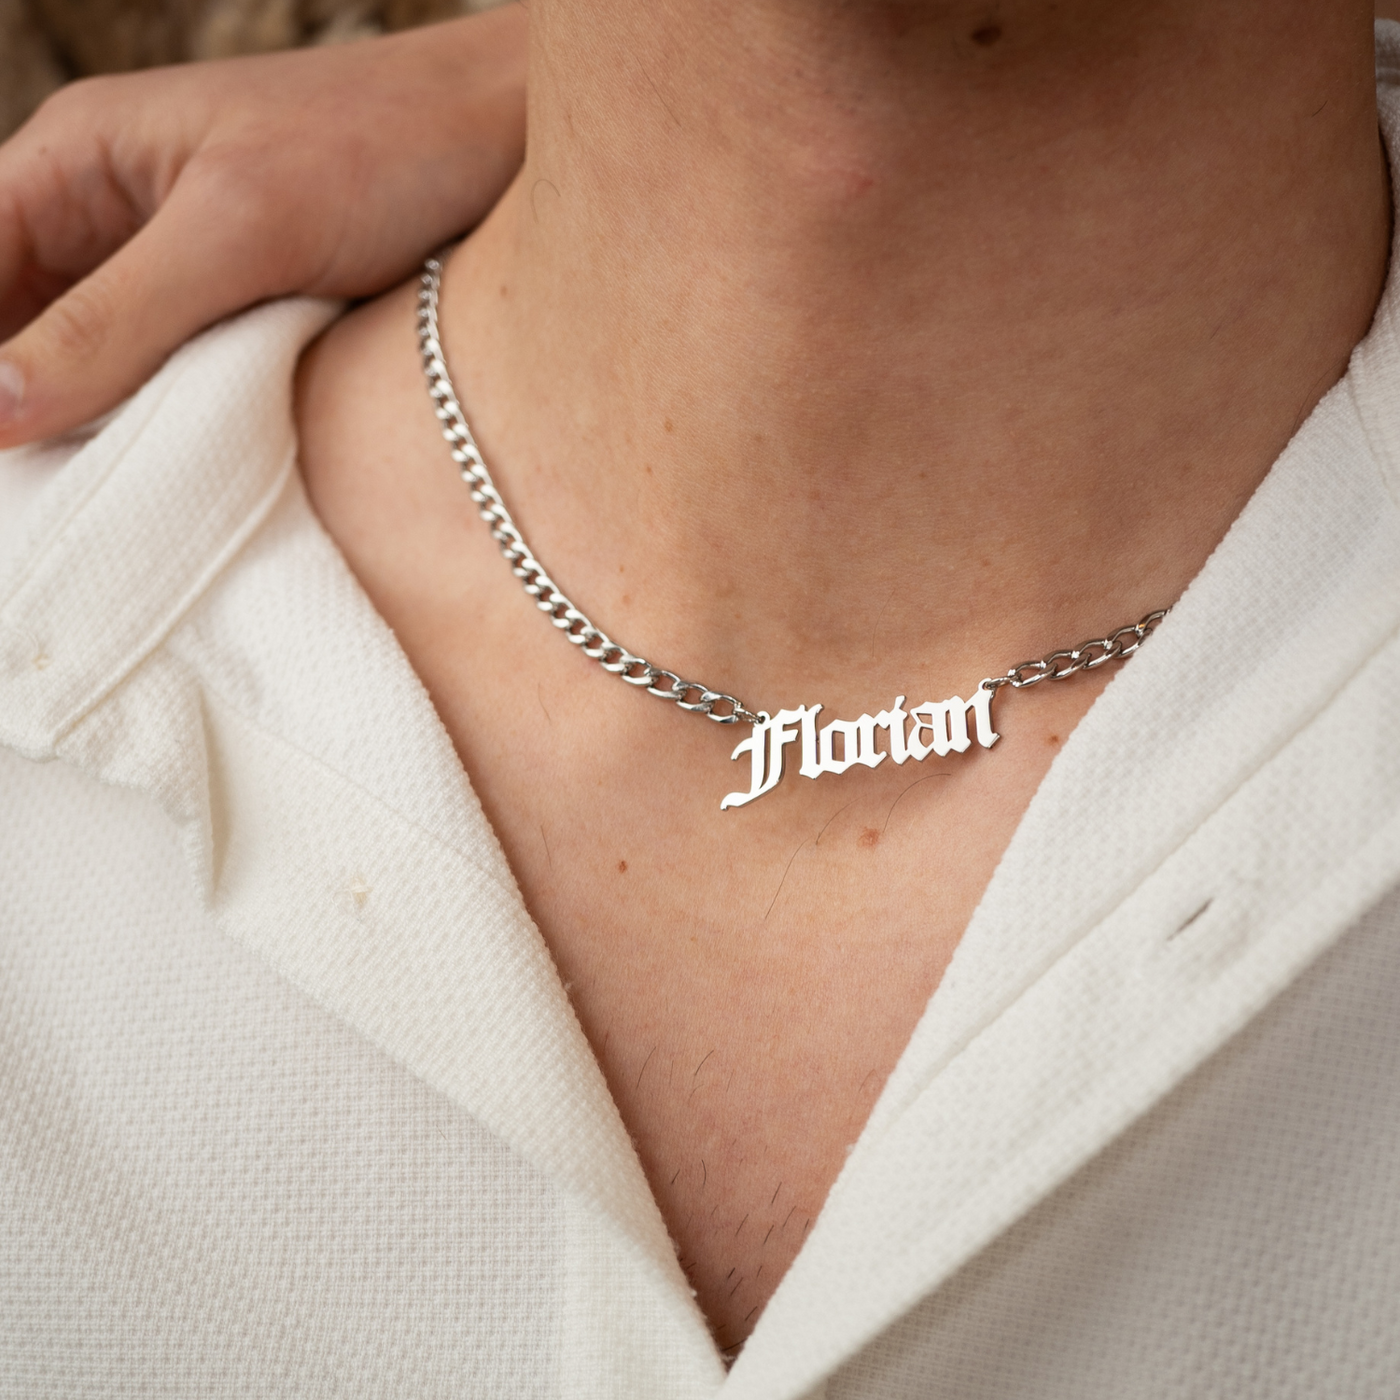 Men's name necklace - Var. Gothic